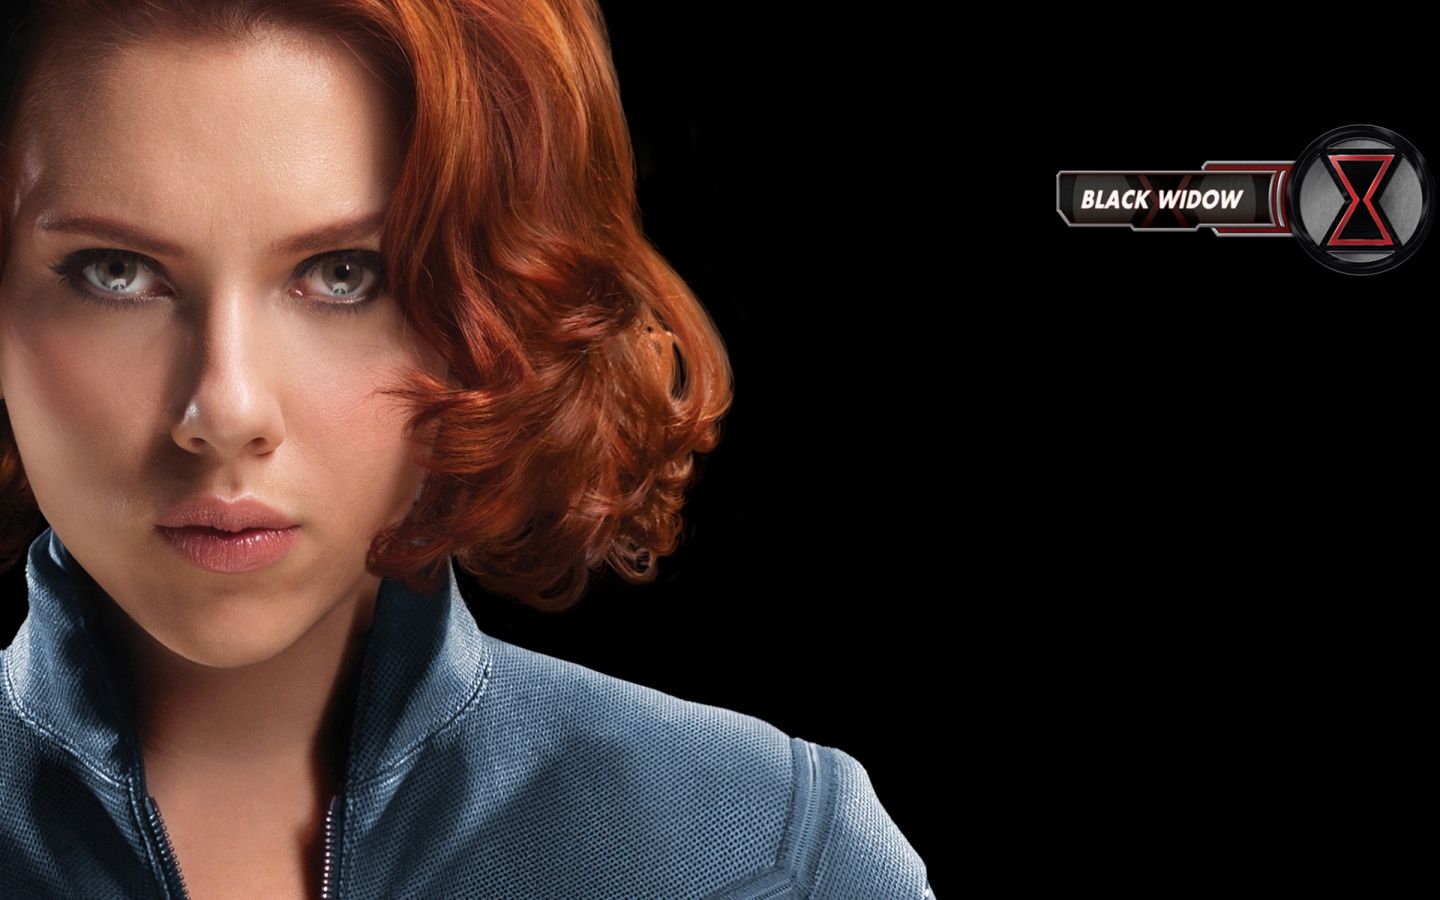 The Avengers Black Widow for 1440 x 900 widescreen resolution